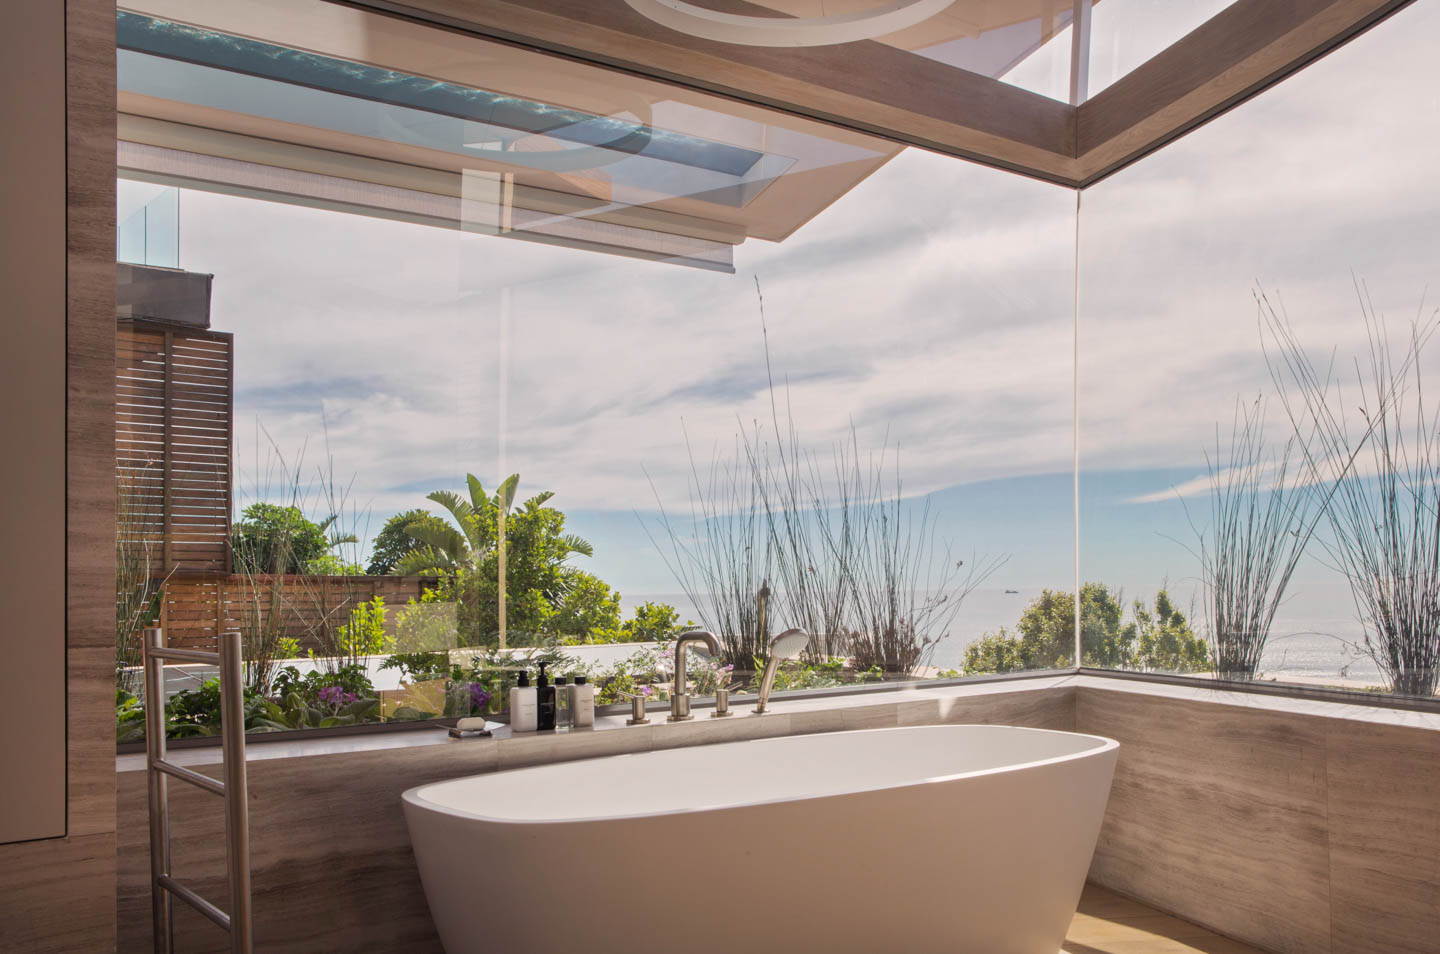 baths with a views